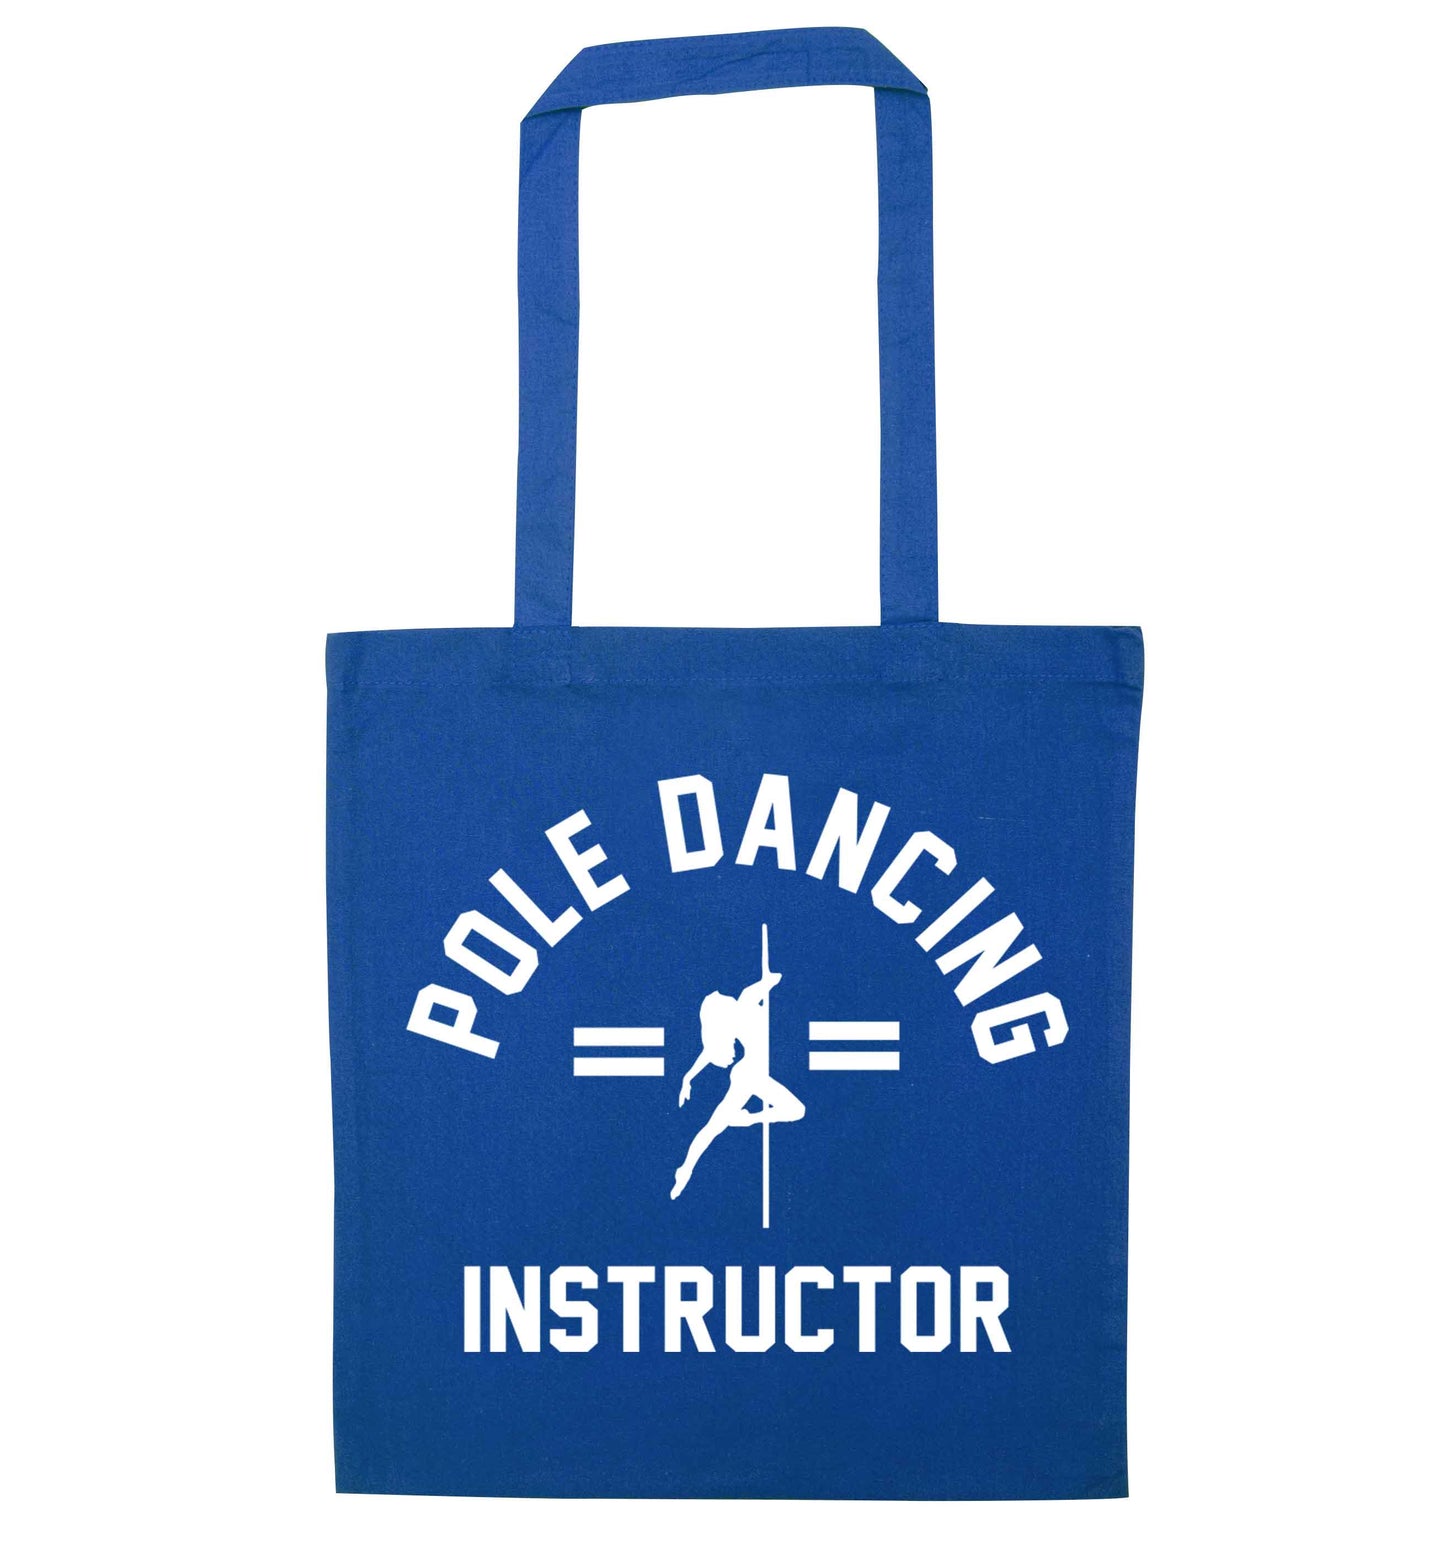 Pole dancing instructor blue tote bag